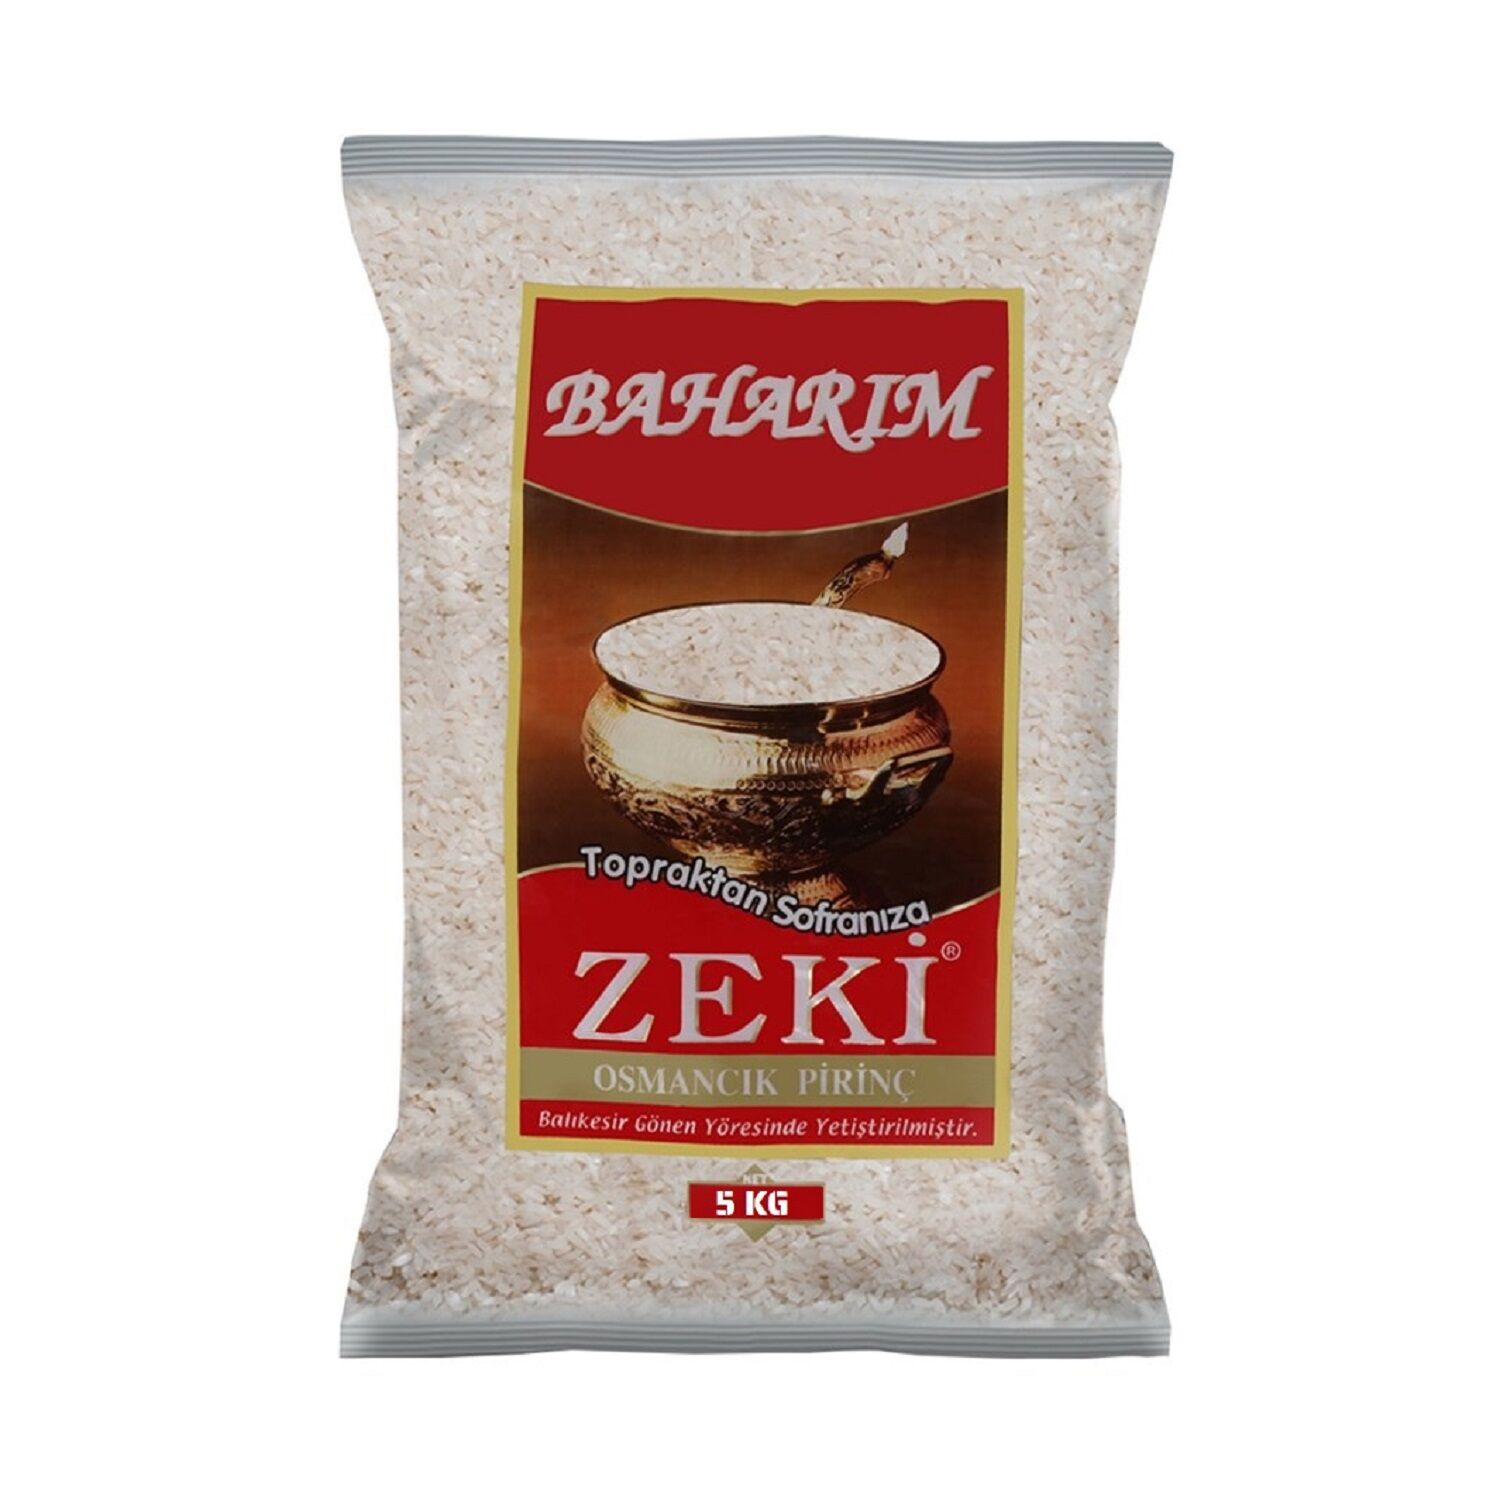 Zeki Osmancık Pirinç 5 KG -Baharım